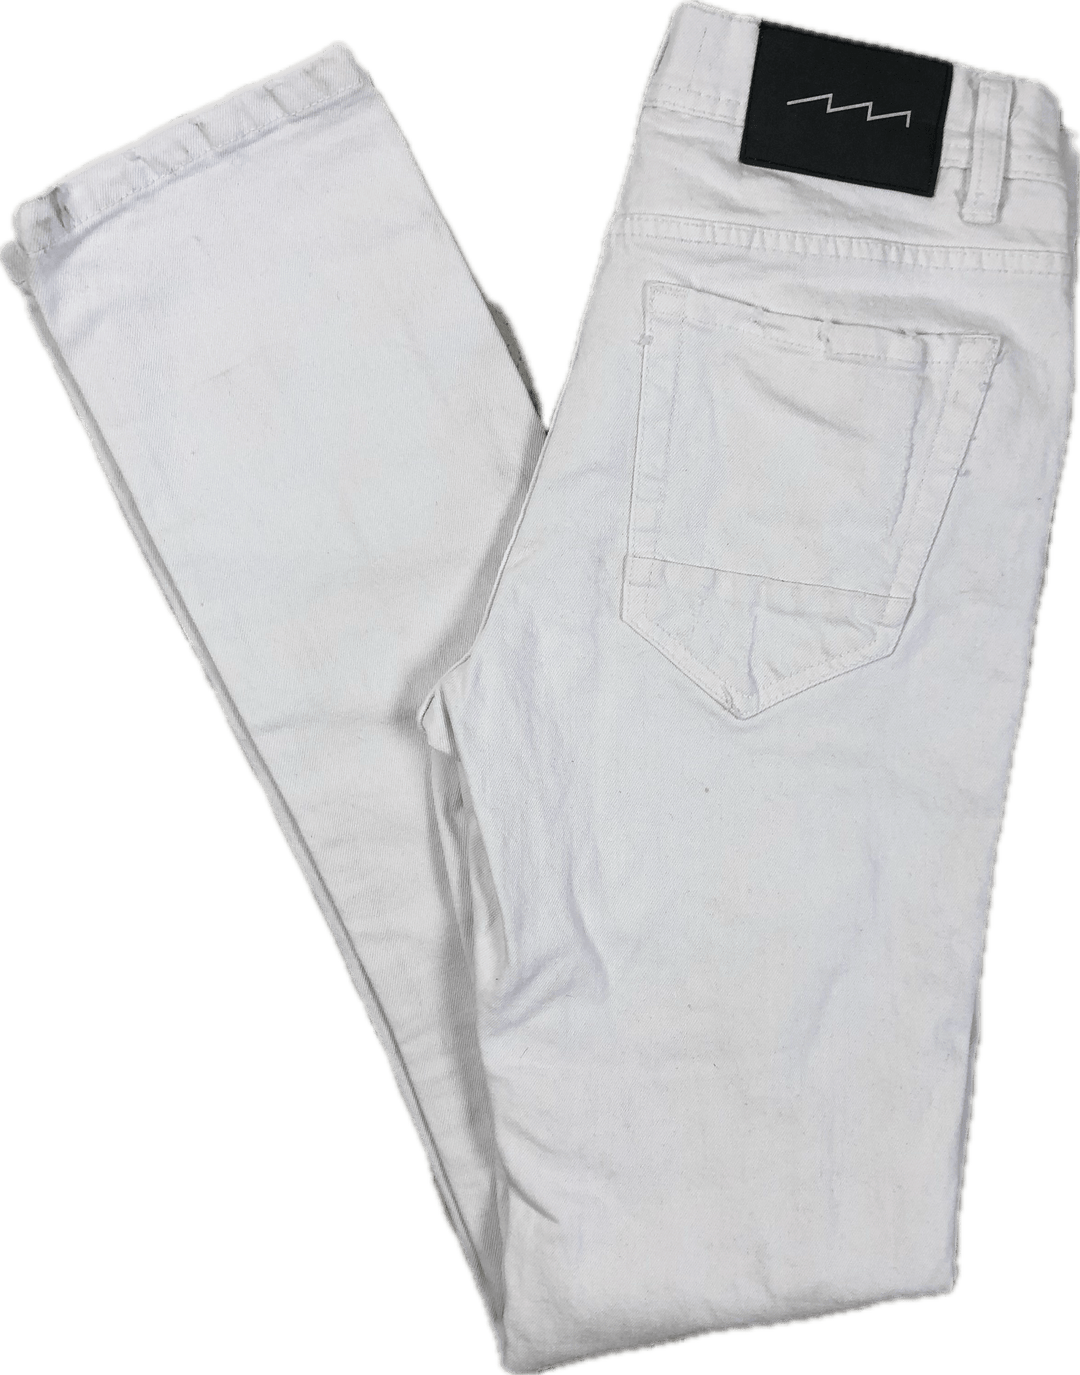 Bandit Jean White Ripped Skinny Jeans -Size 26 - Jean Pool